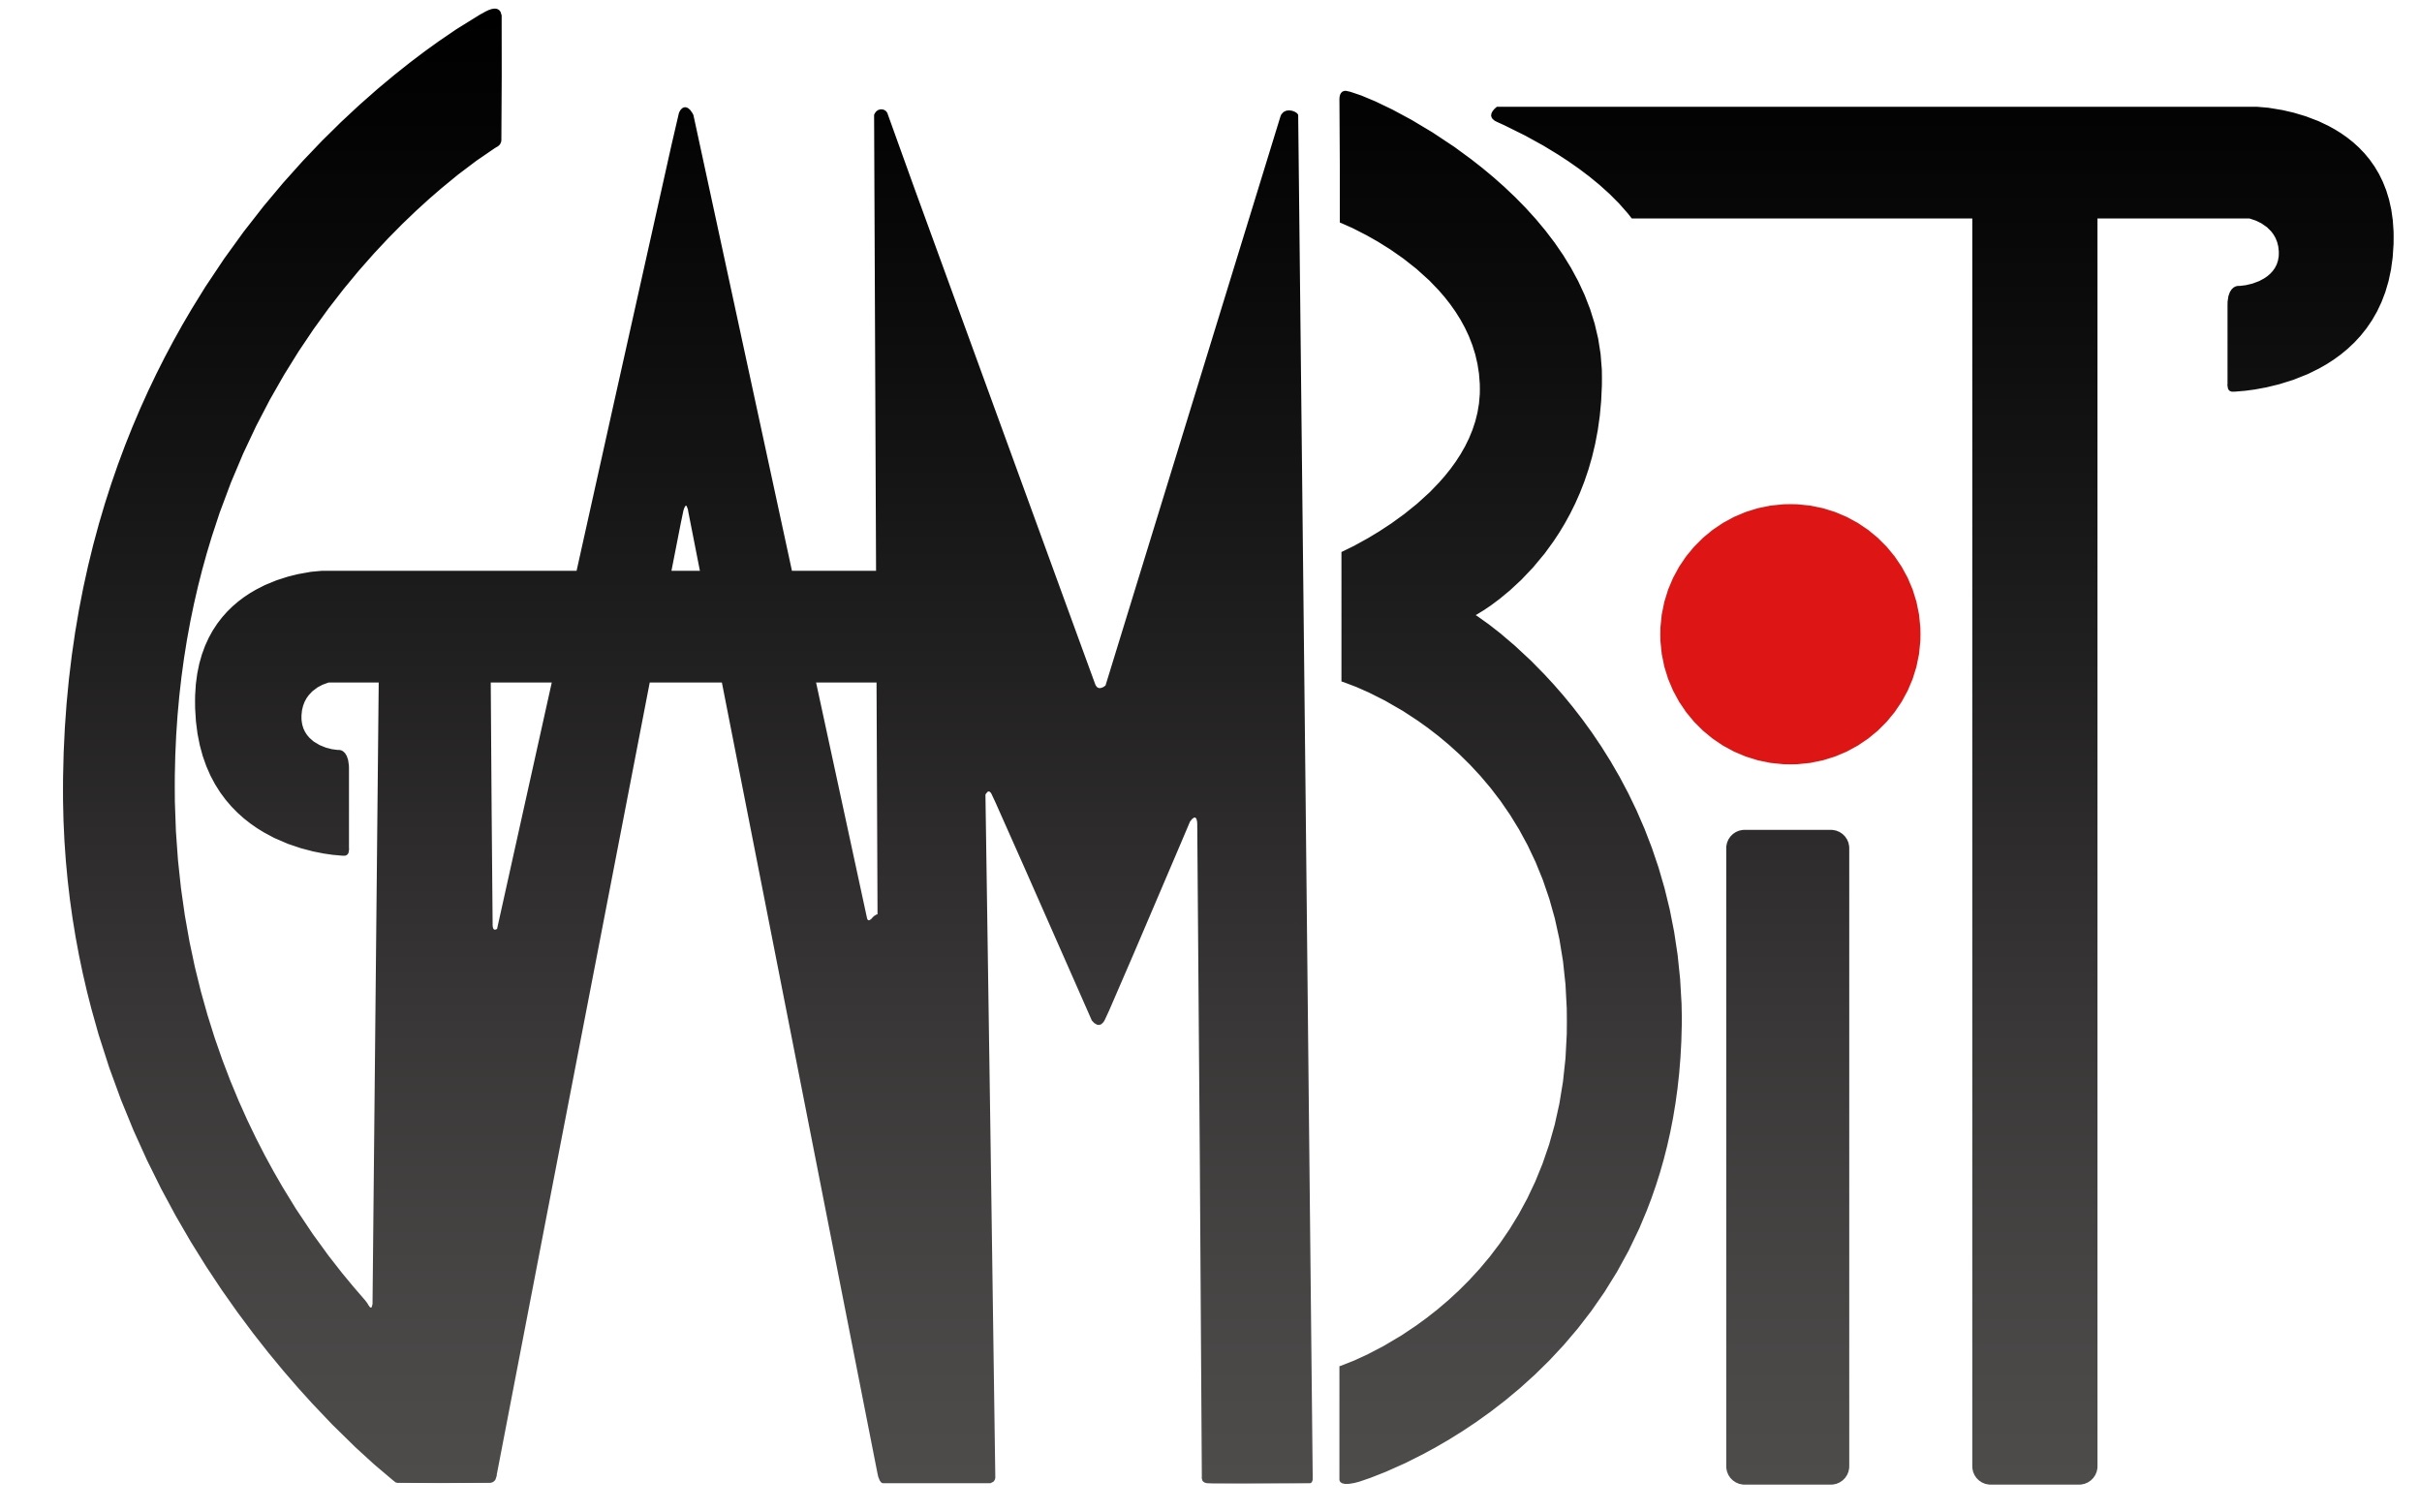 GAMBIT Logo.jpg 1cbb58f442a8ec230be4badf33aa2a9d